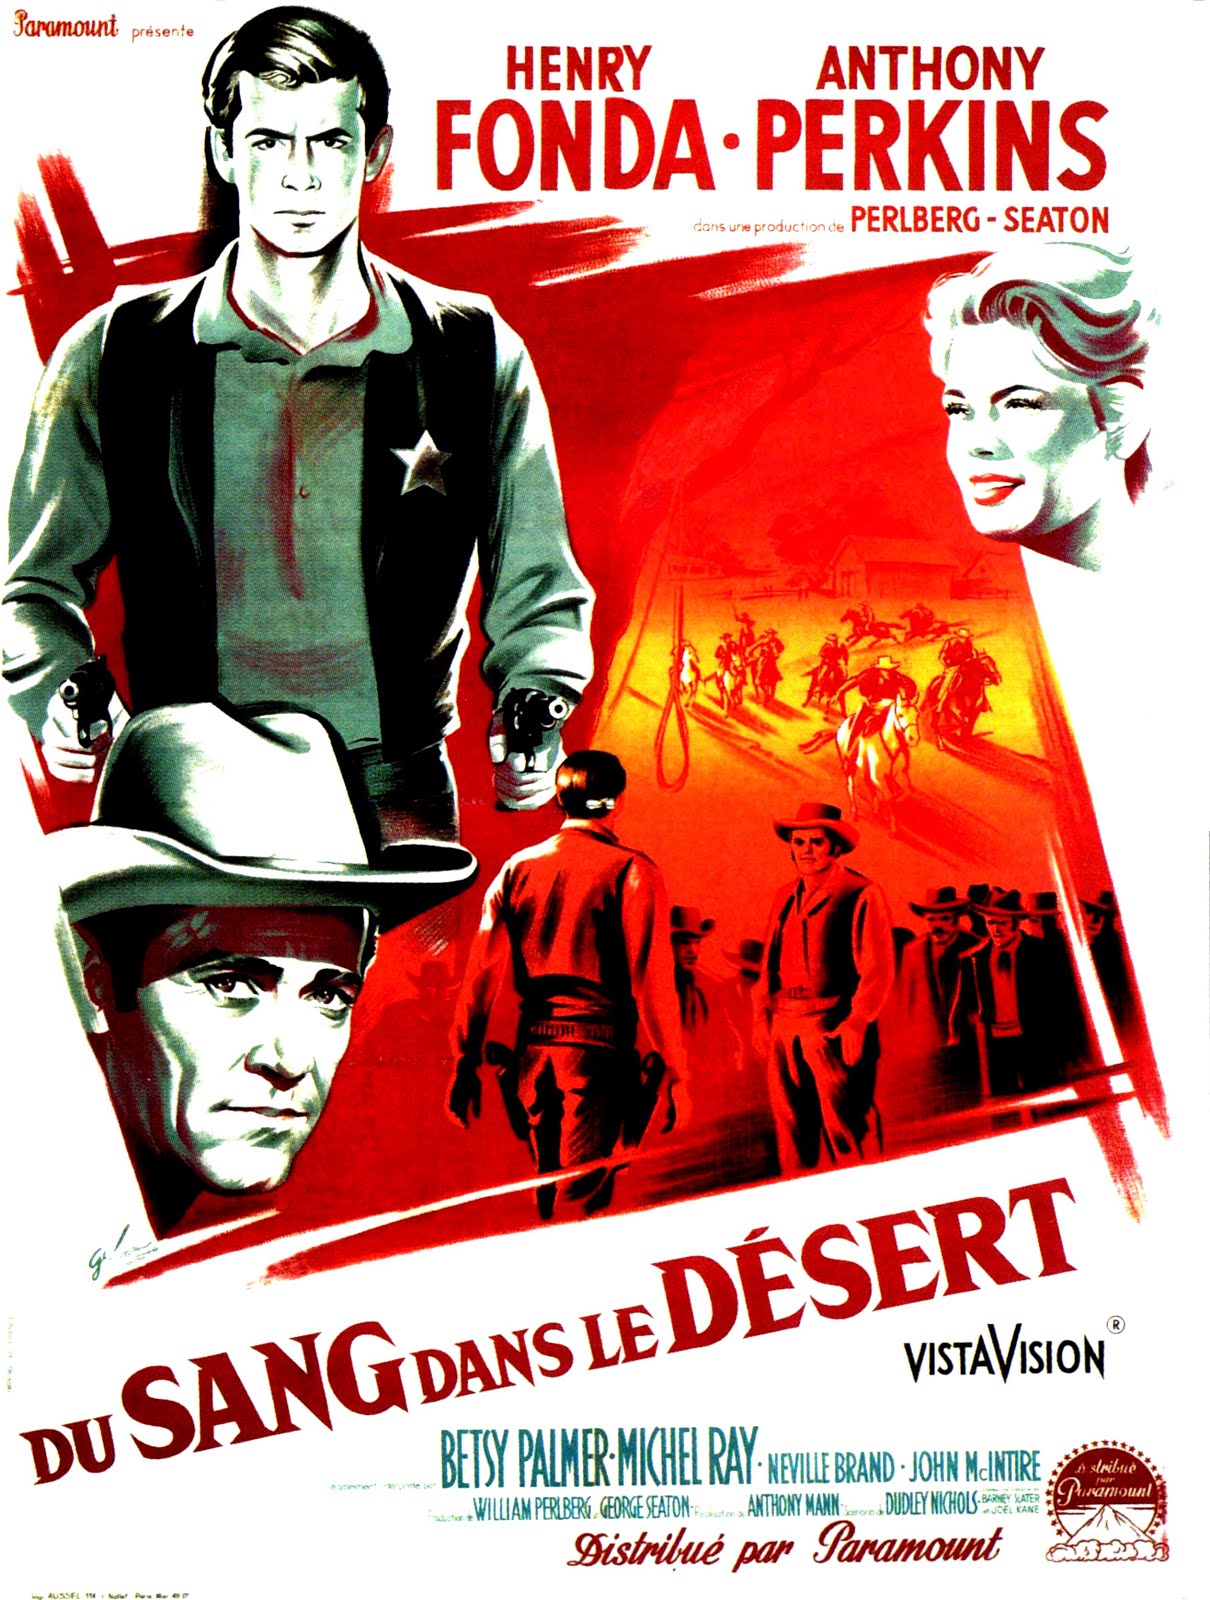 Du sang dans le désert (1956) Anthony Mann - The tin star (22.10.1956 / 1956)